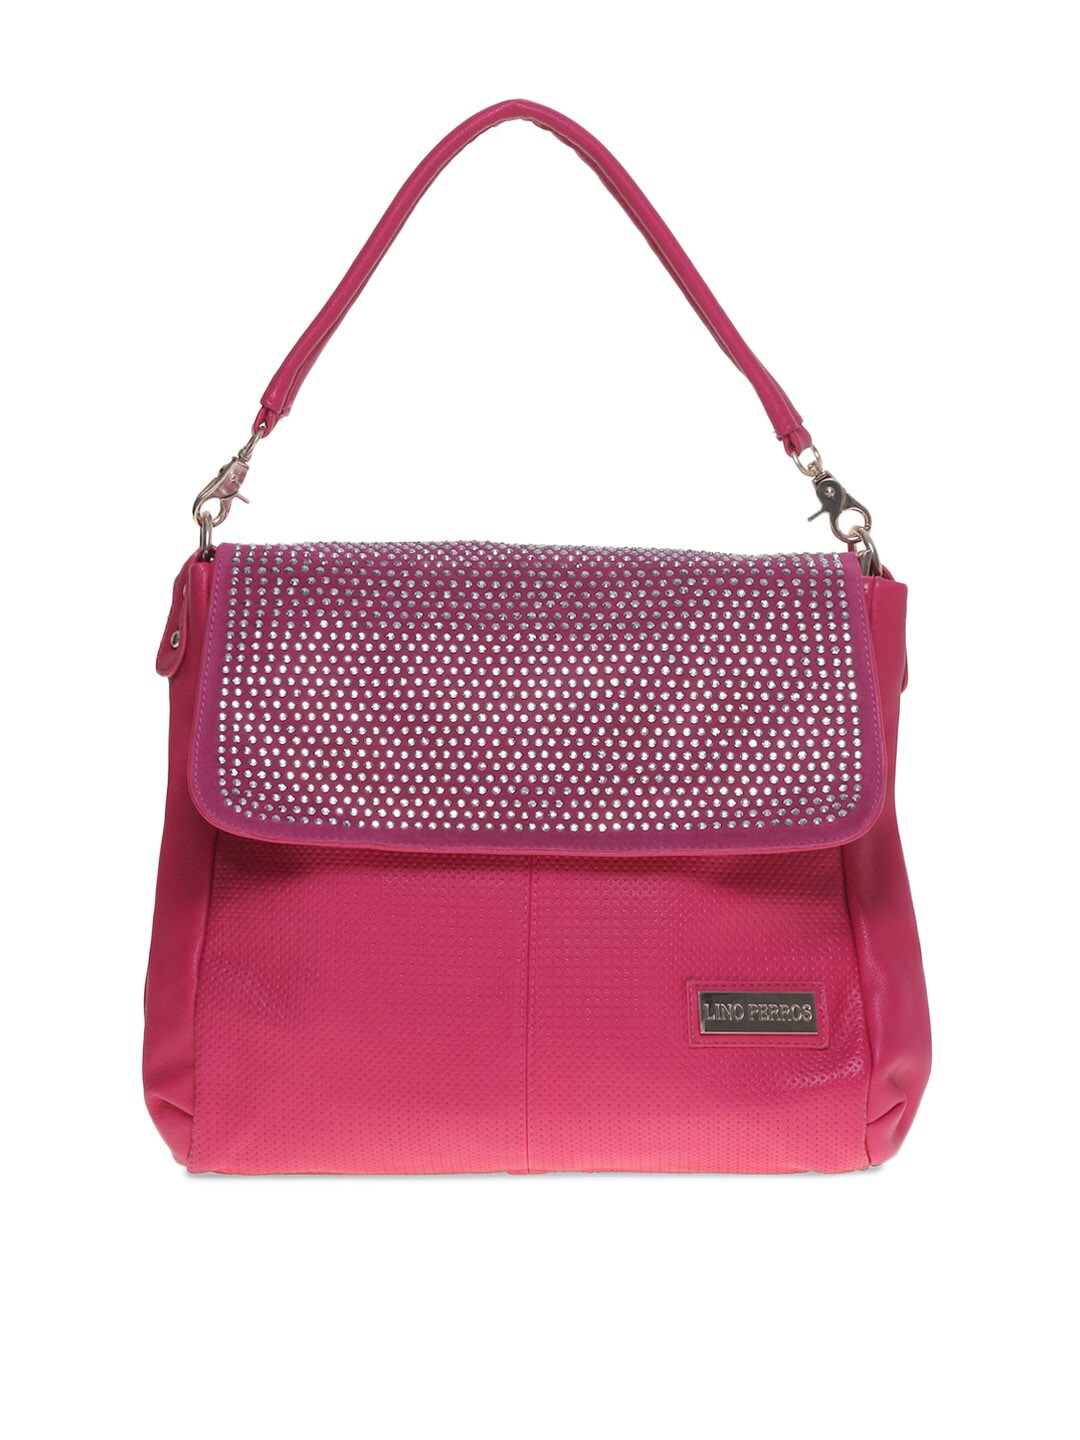 Lino Perros Women Pink Handbag